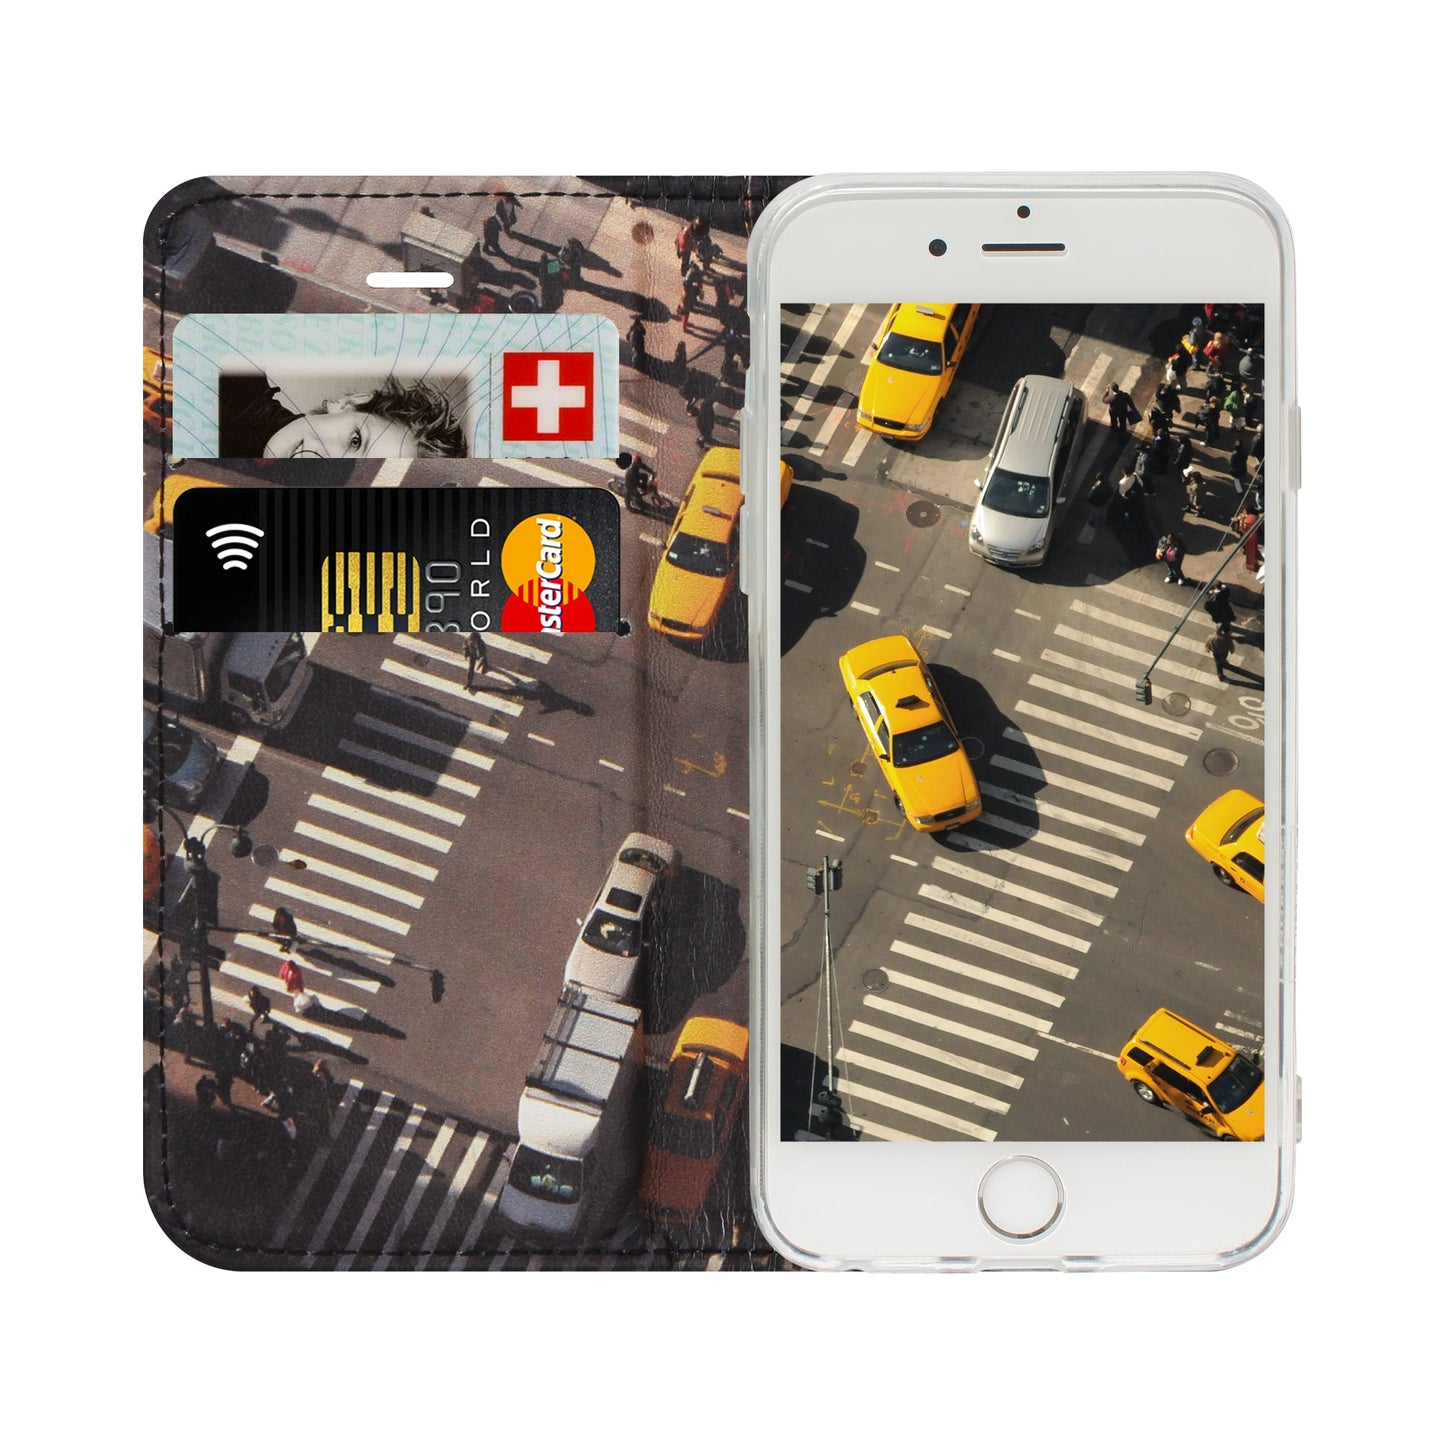 New York City Panorama Case für iPhone 5/5S/SE 1